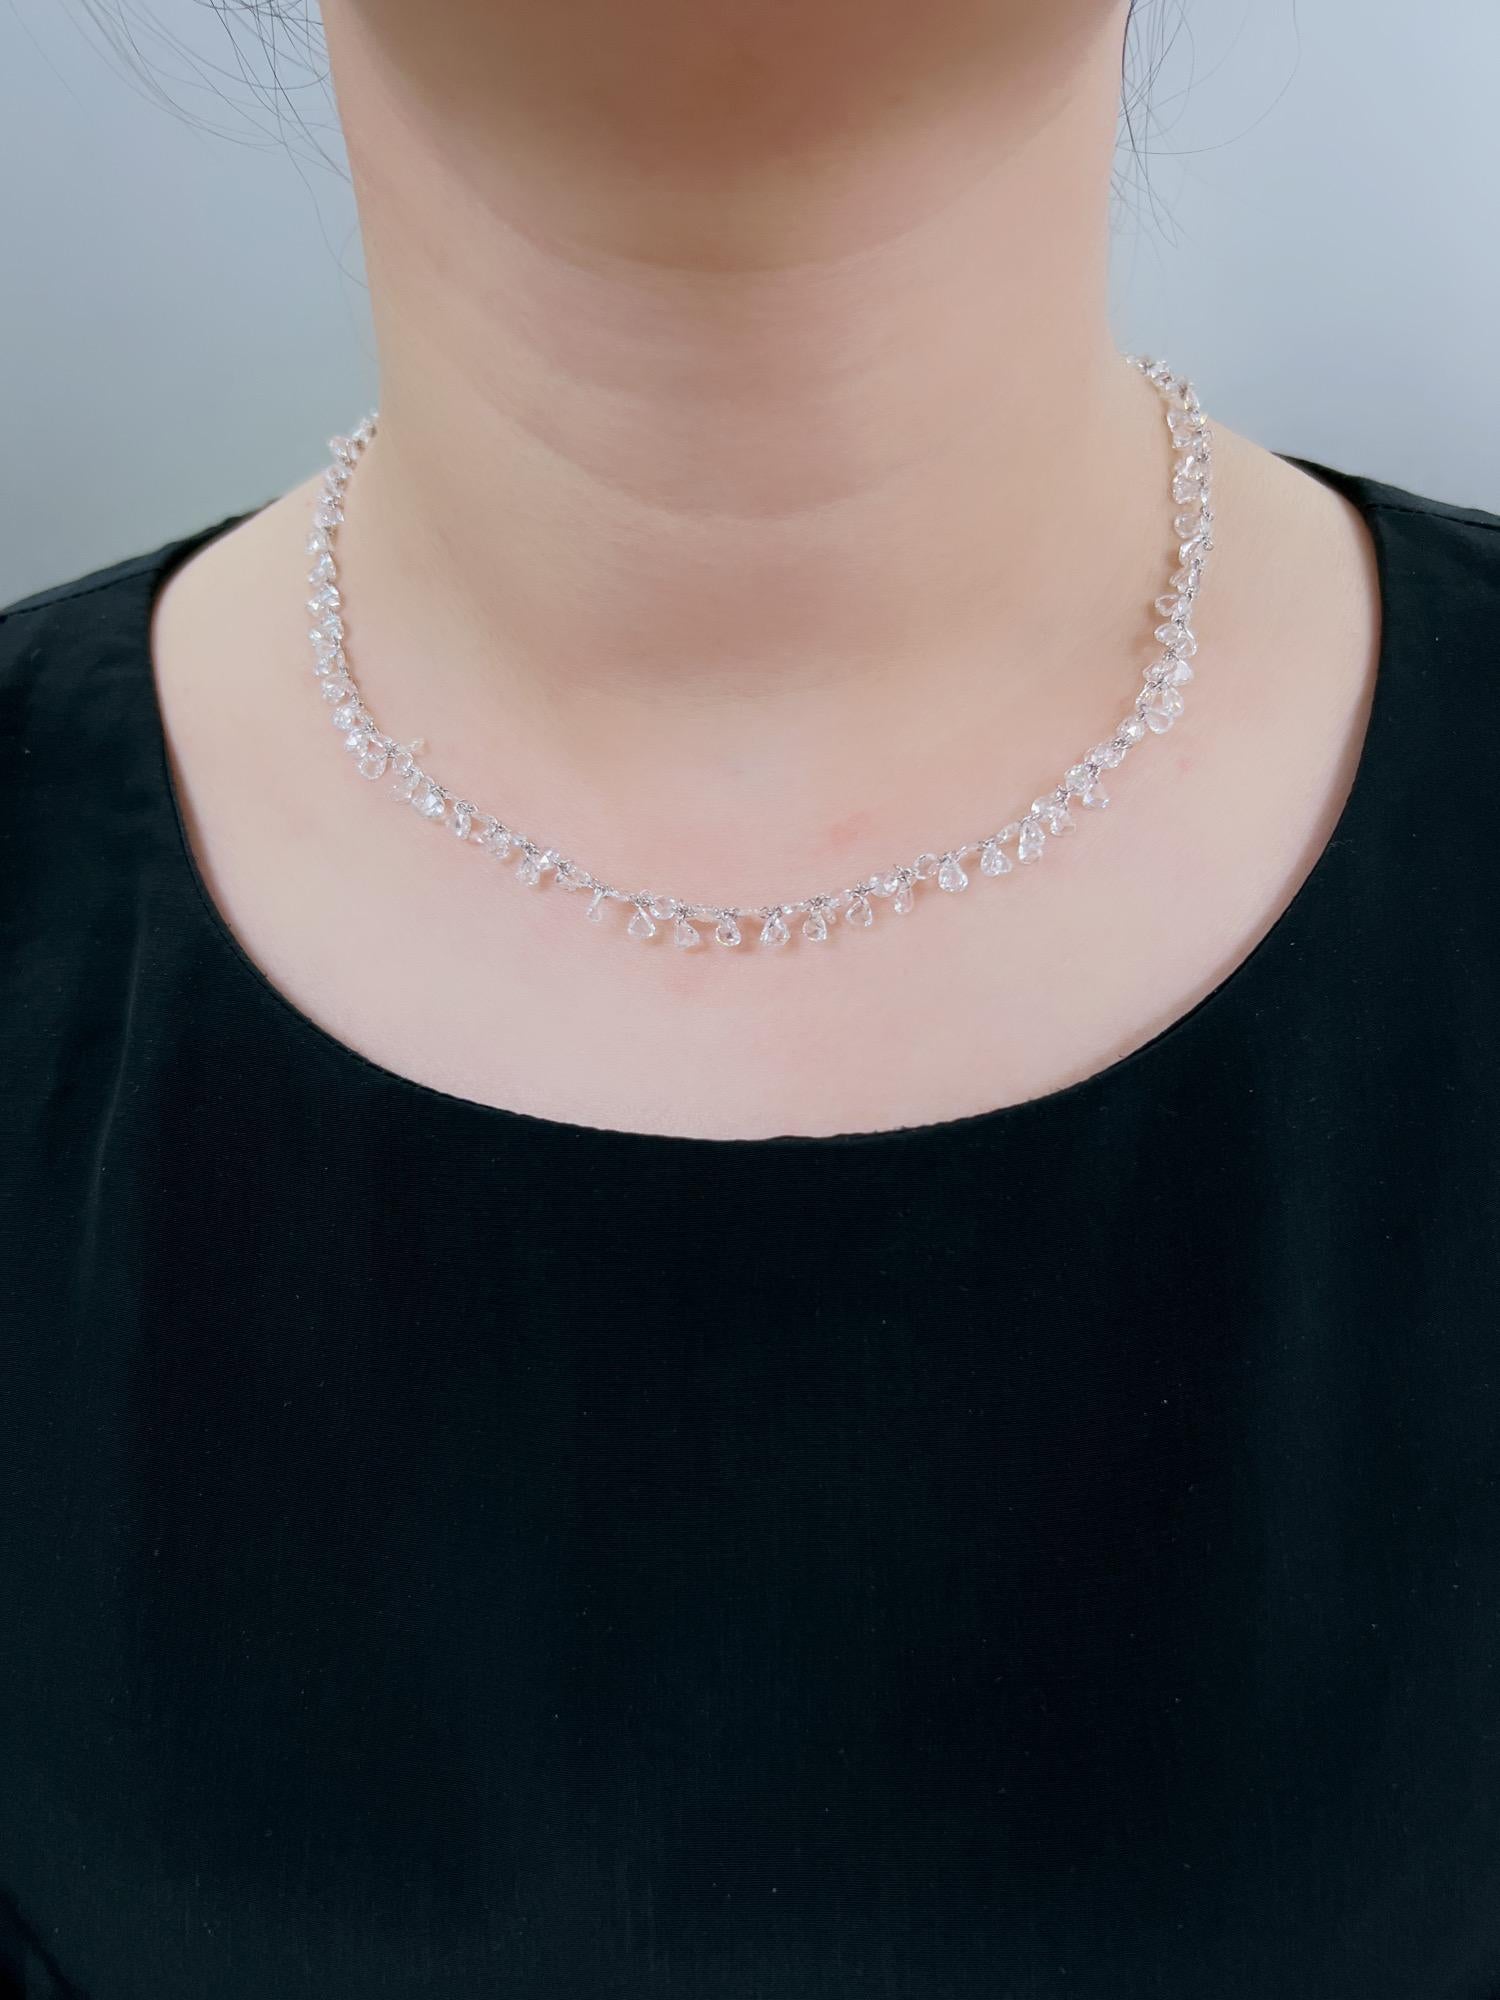 Women's 28.05 Carat Rose Cut Diamond Necklace on 18 Karat White Gold For Sale